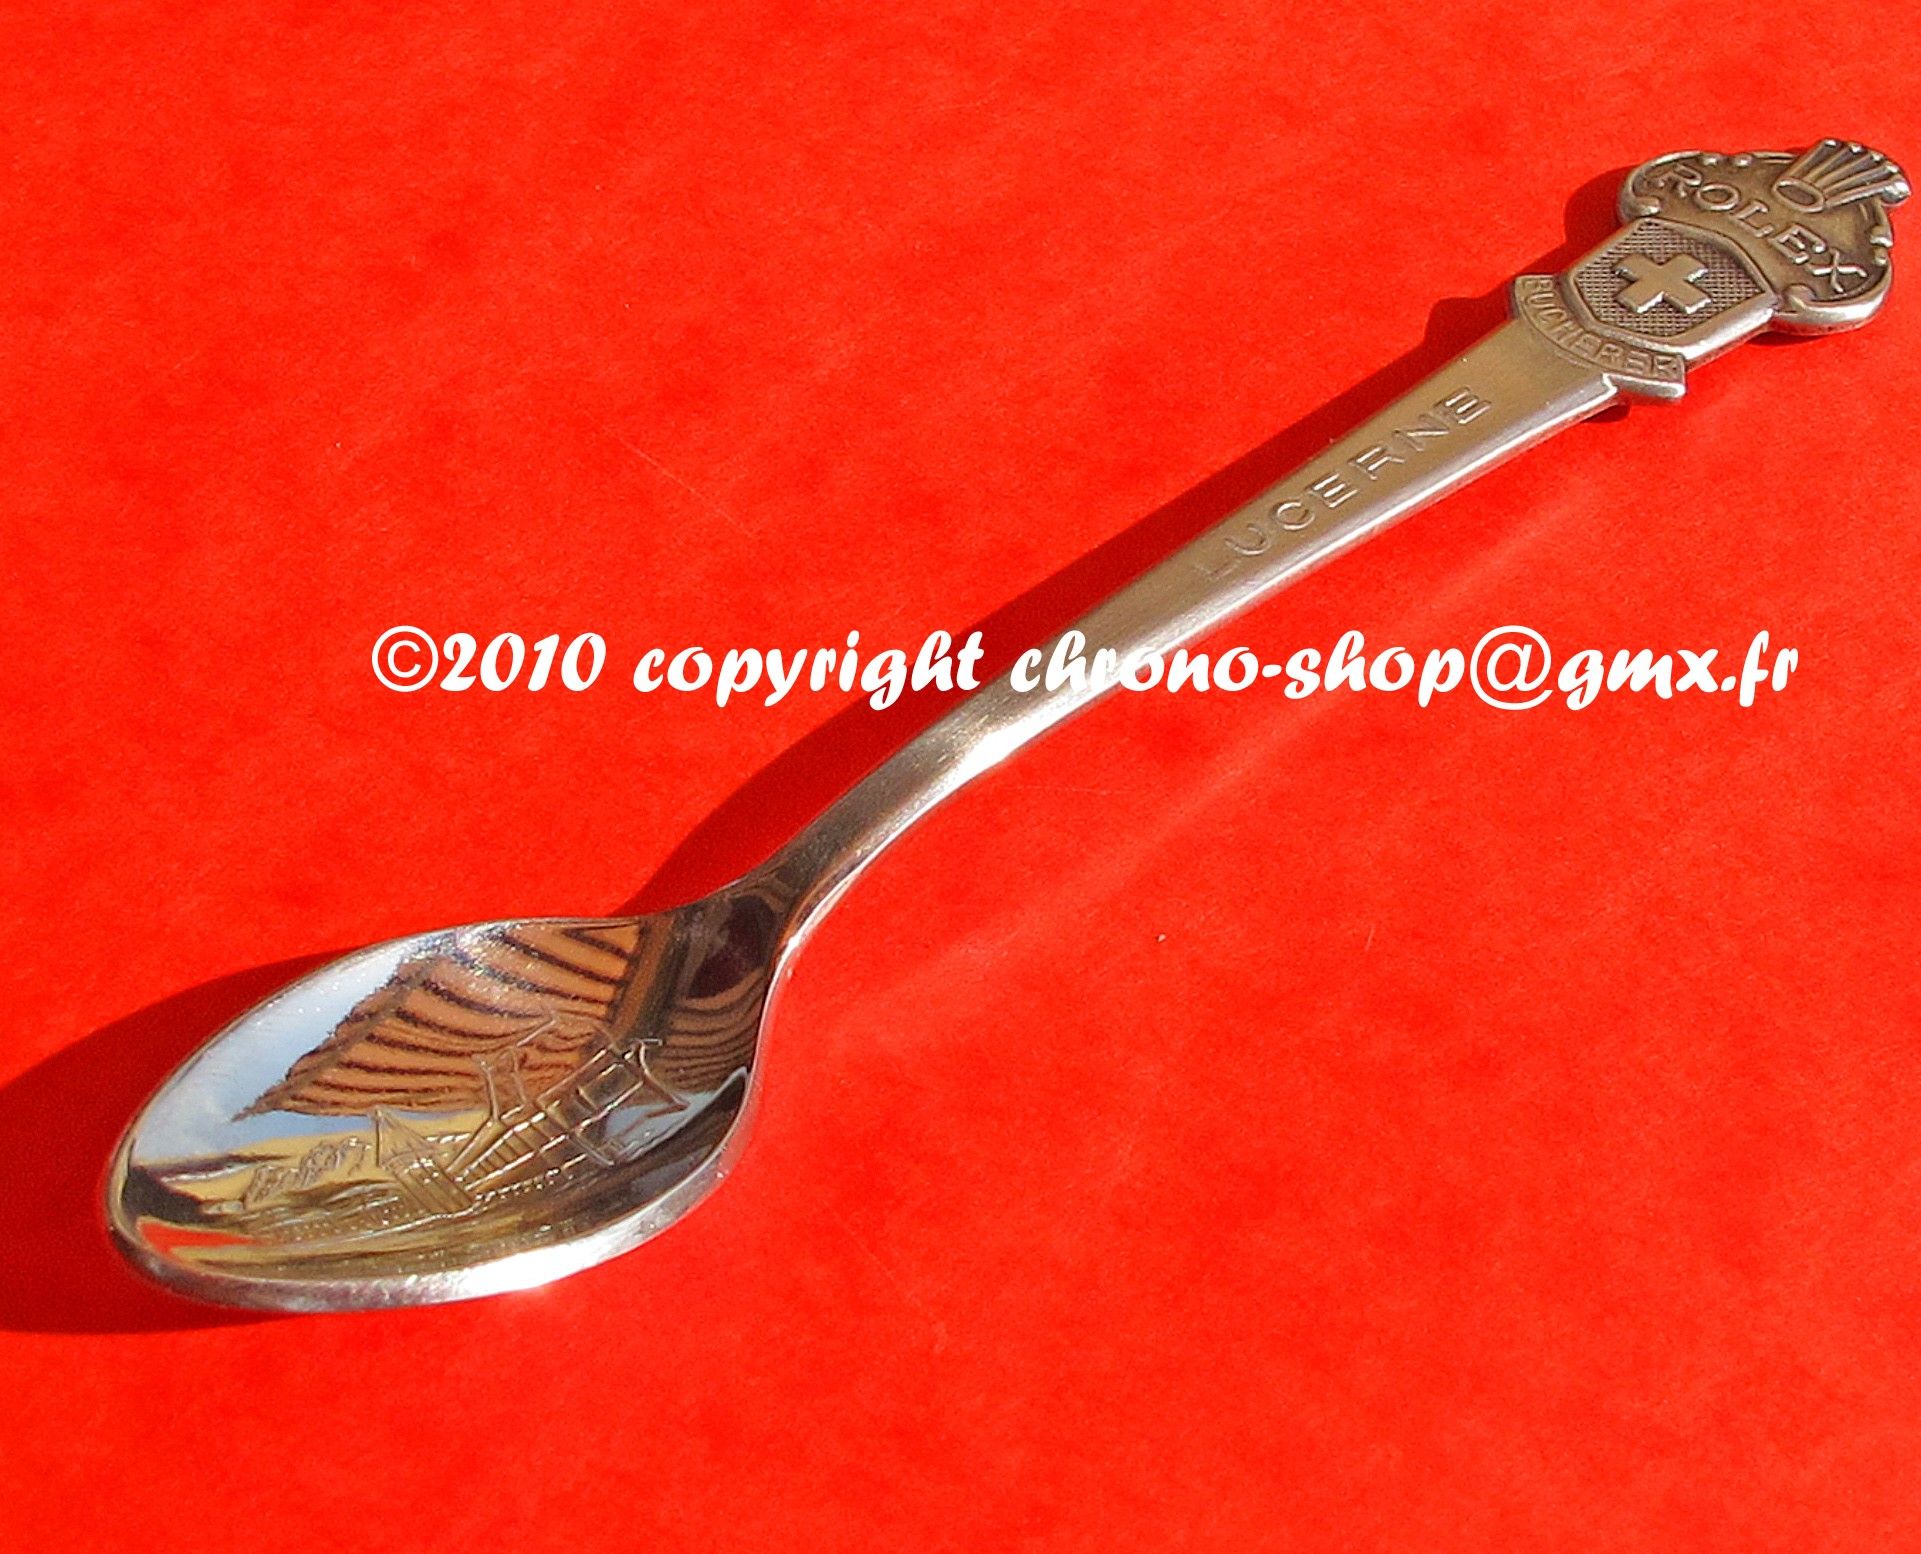 bucherer spoon